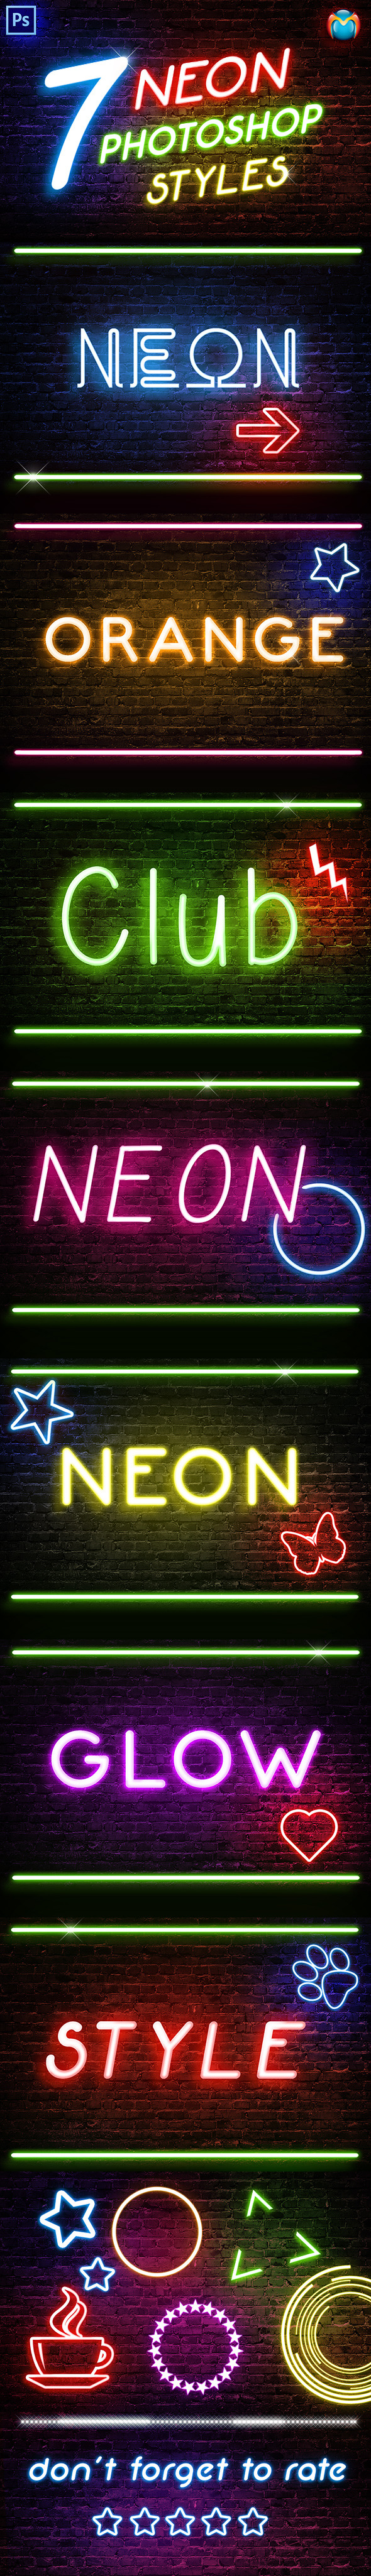 Neon Photoshop Styles